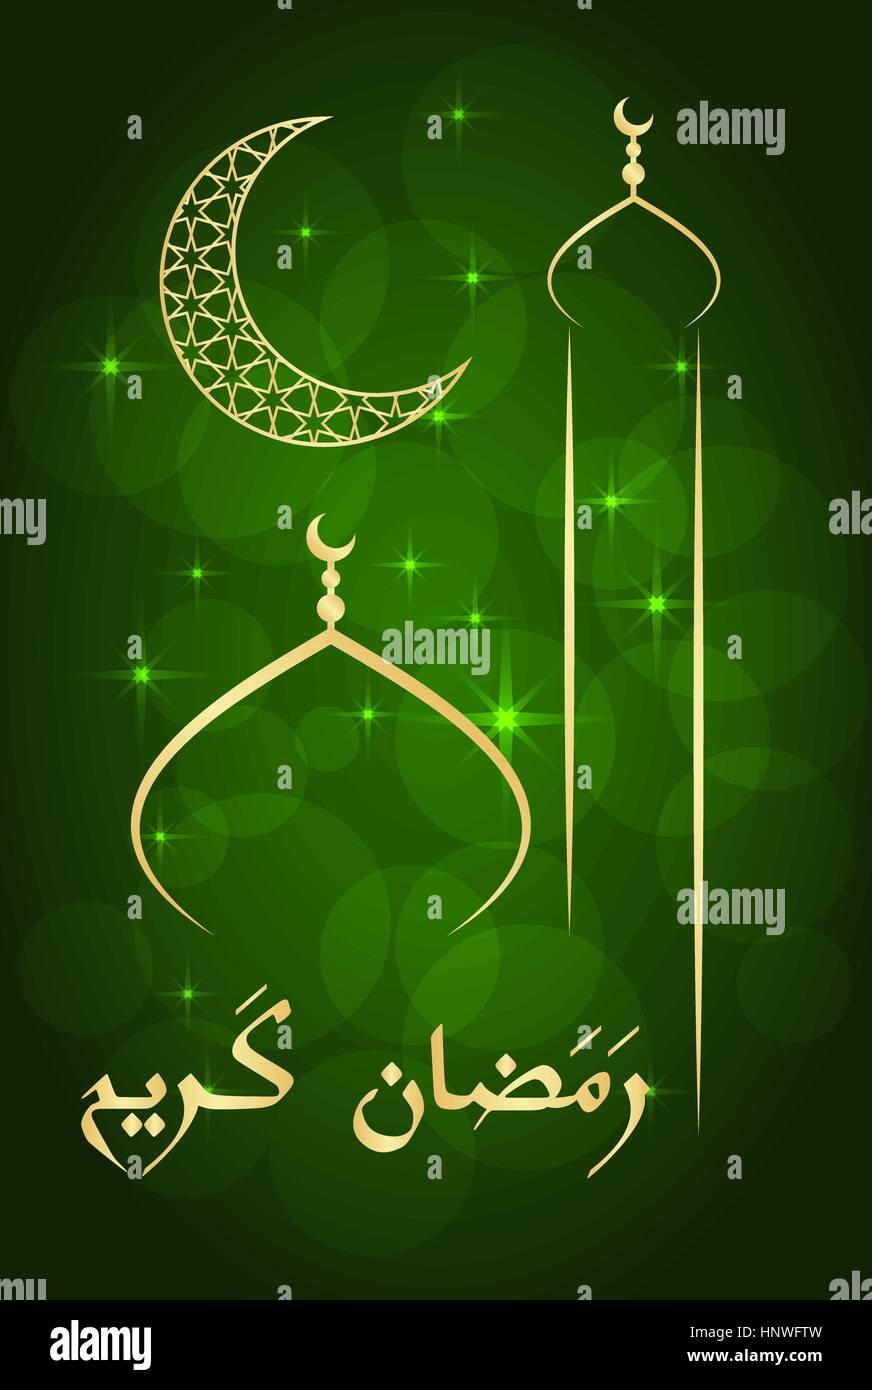 Ramadan greeting card on green background. Vector illustration ...